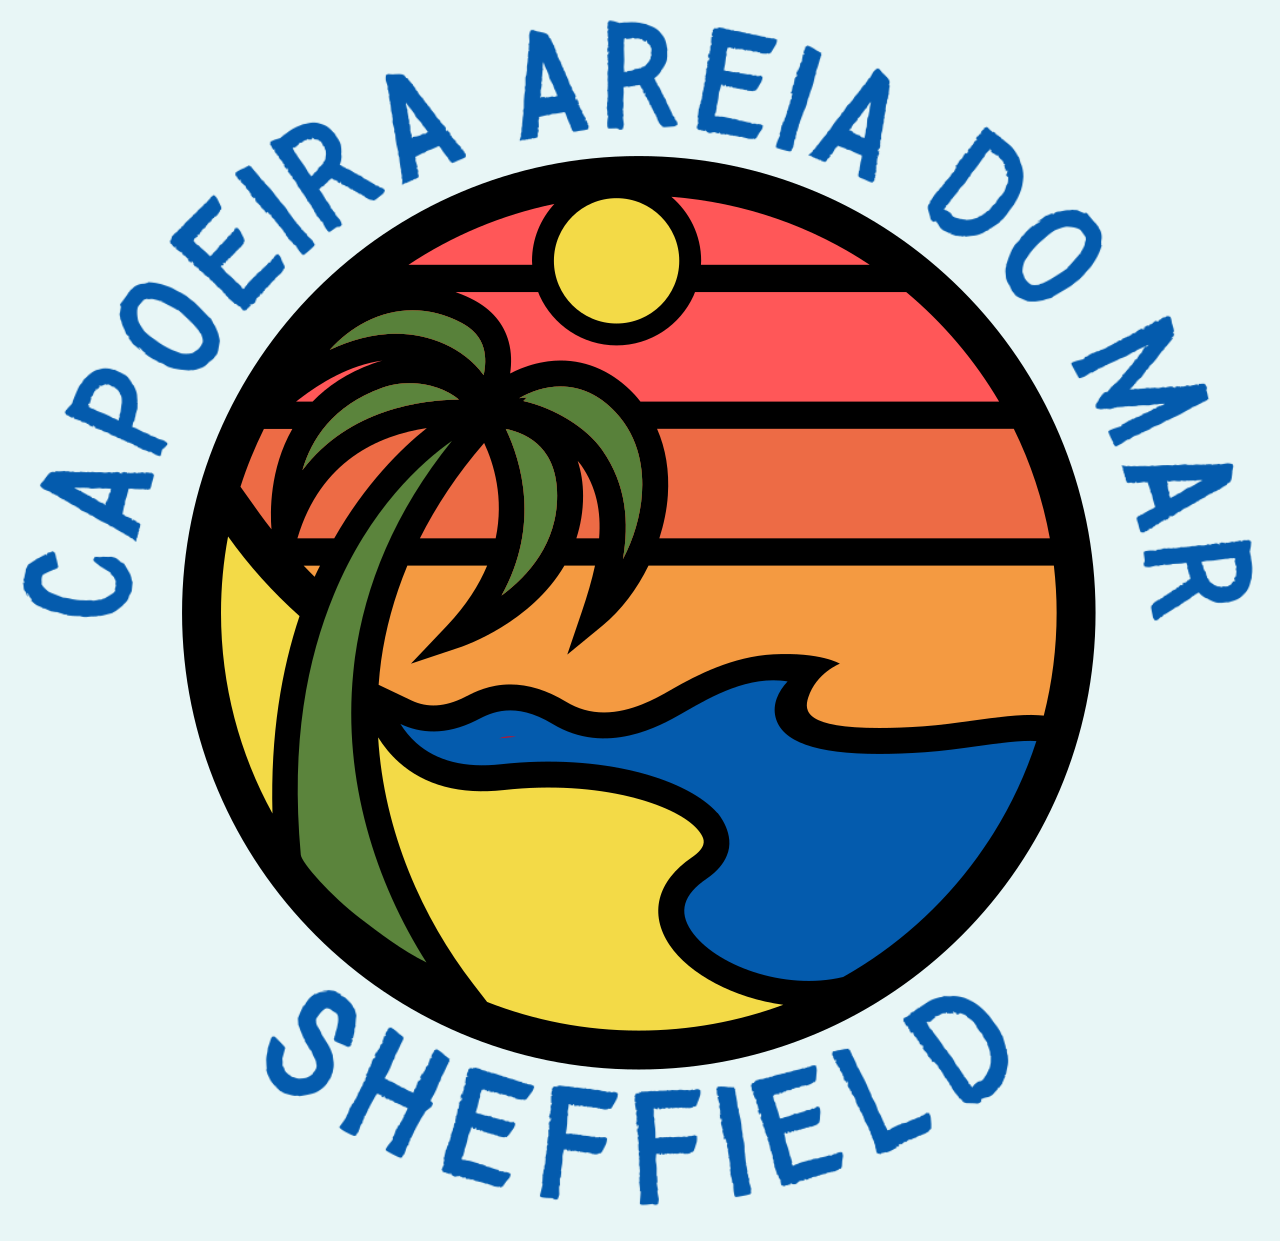 Capoeira Angola Sheffield logo